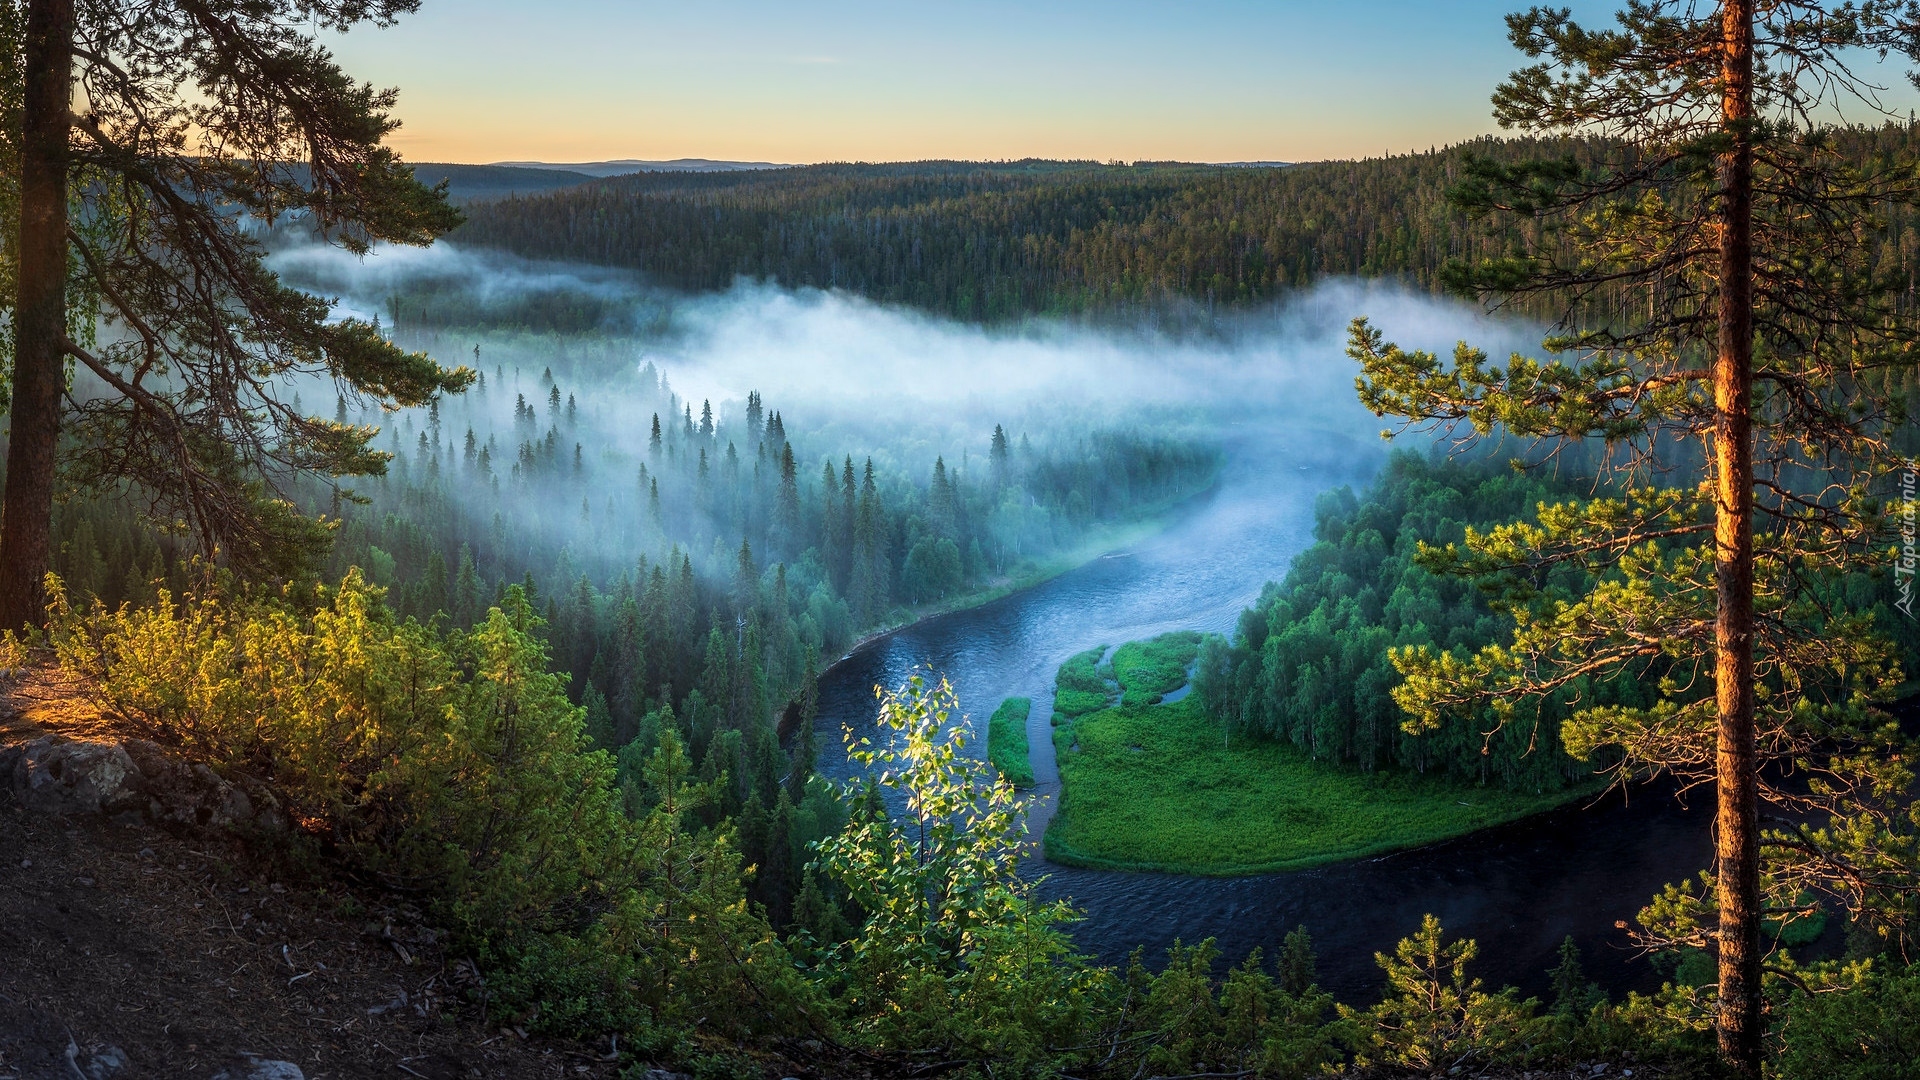 Las, Rzeka Kitkajoki, Mgła, Drzewa, Sosny, Gmina Kuusamo, Finlandia